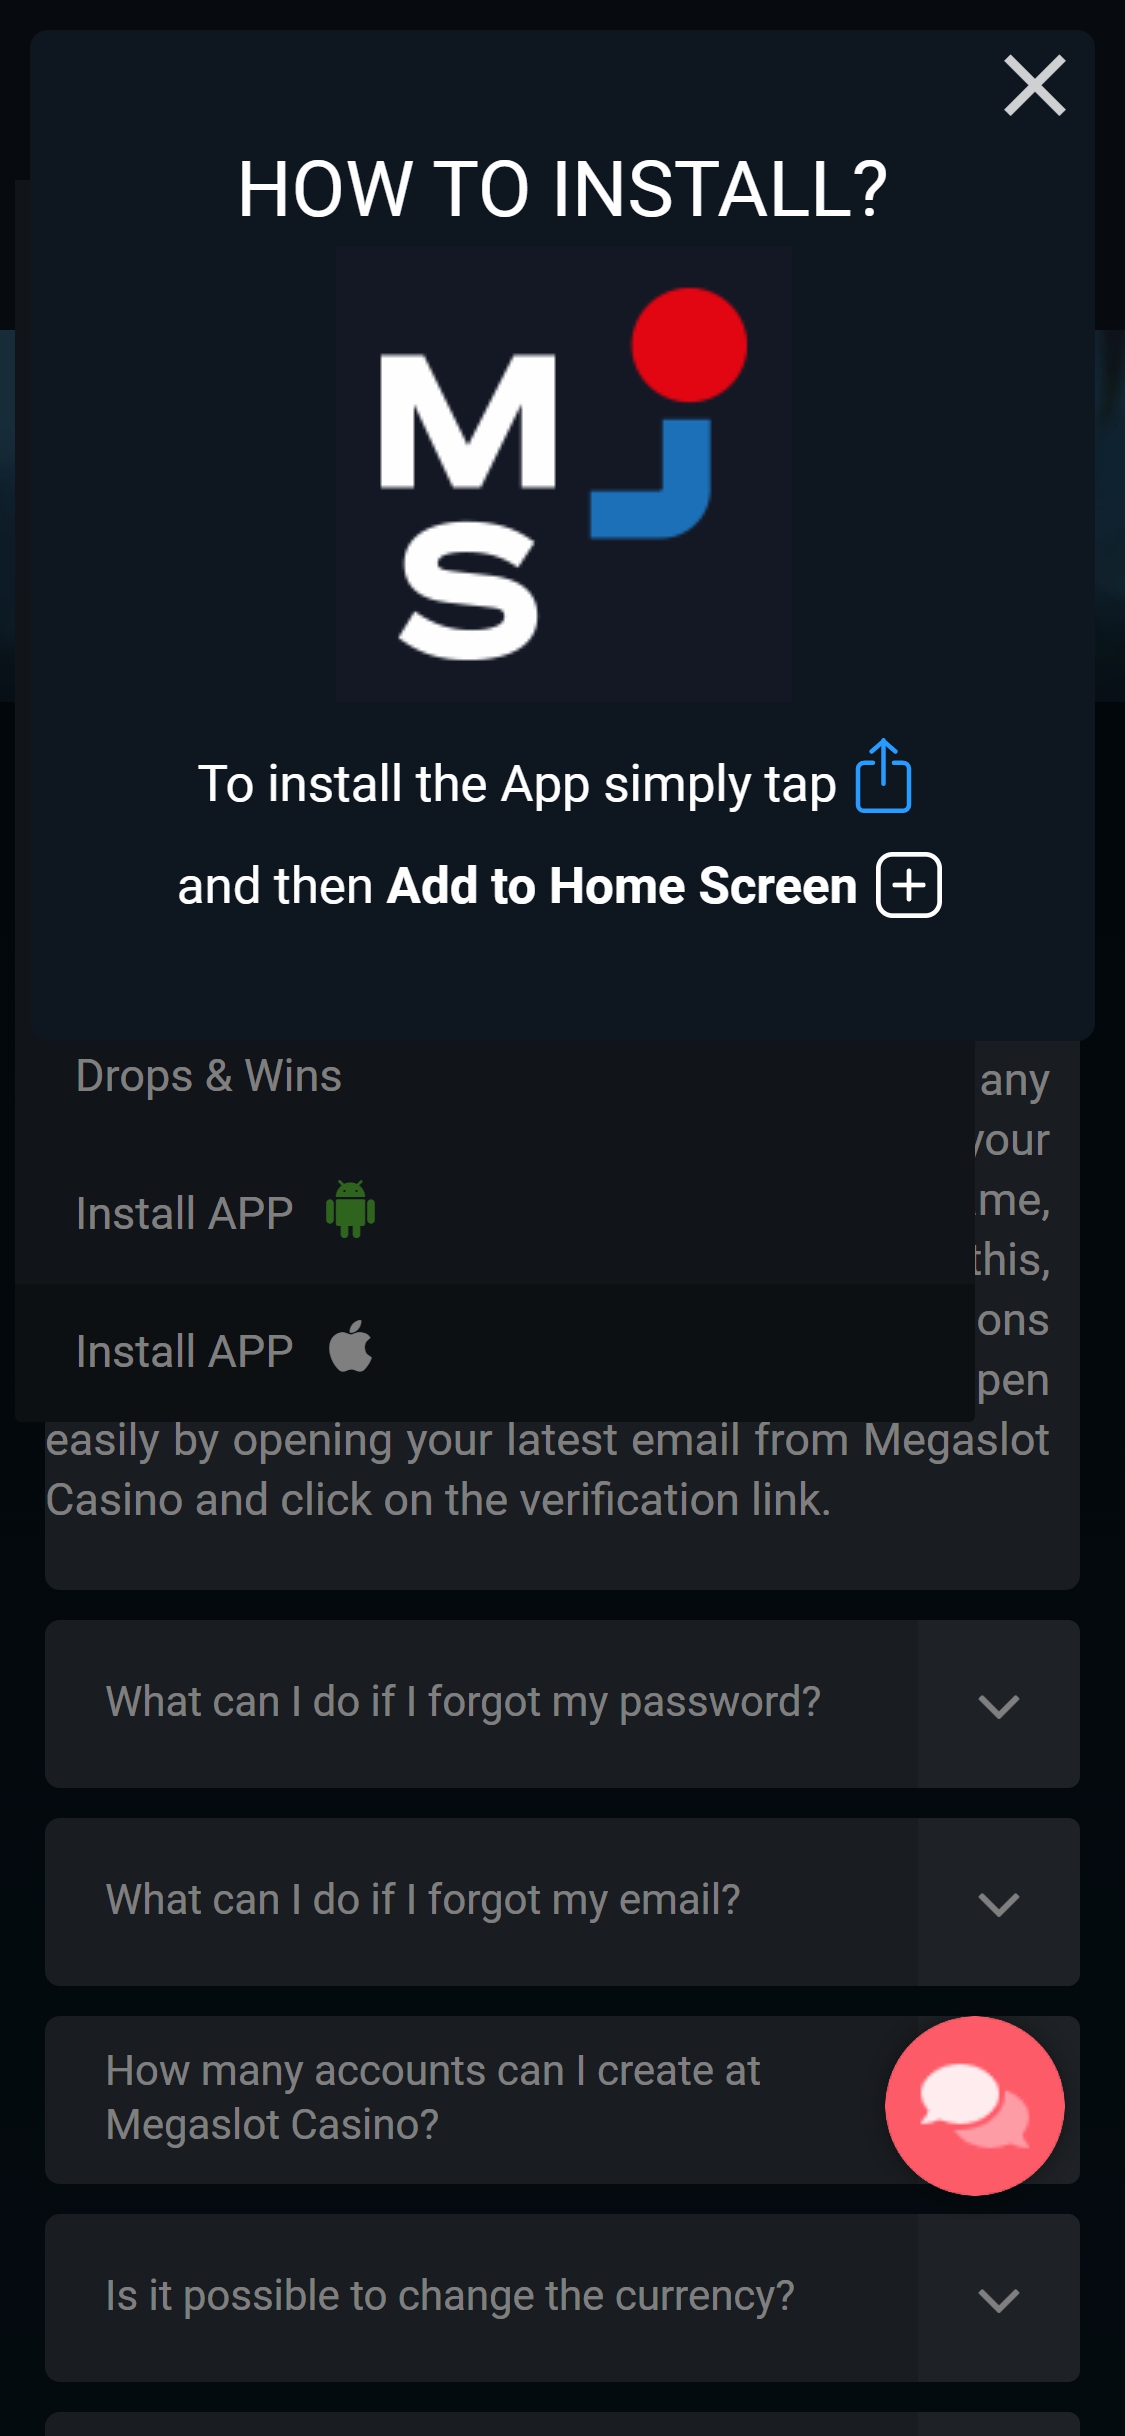 Megaslot Casino Mobile App Review